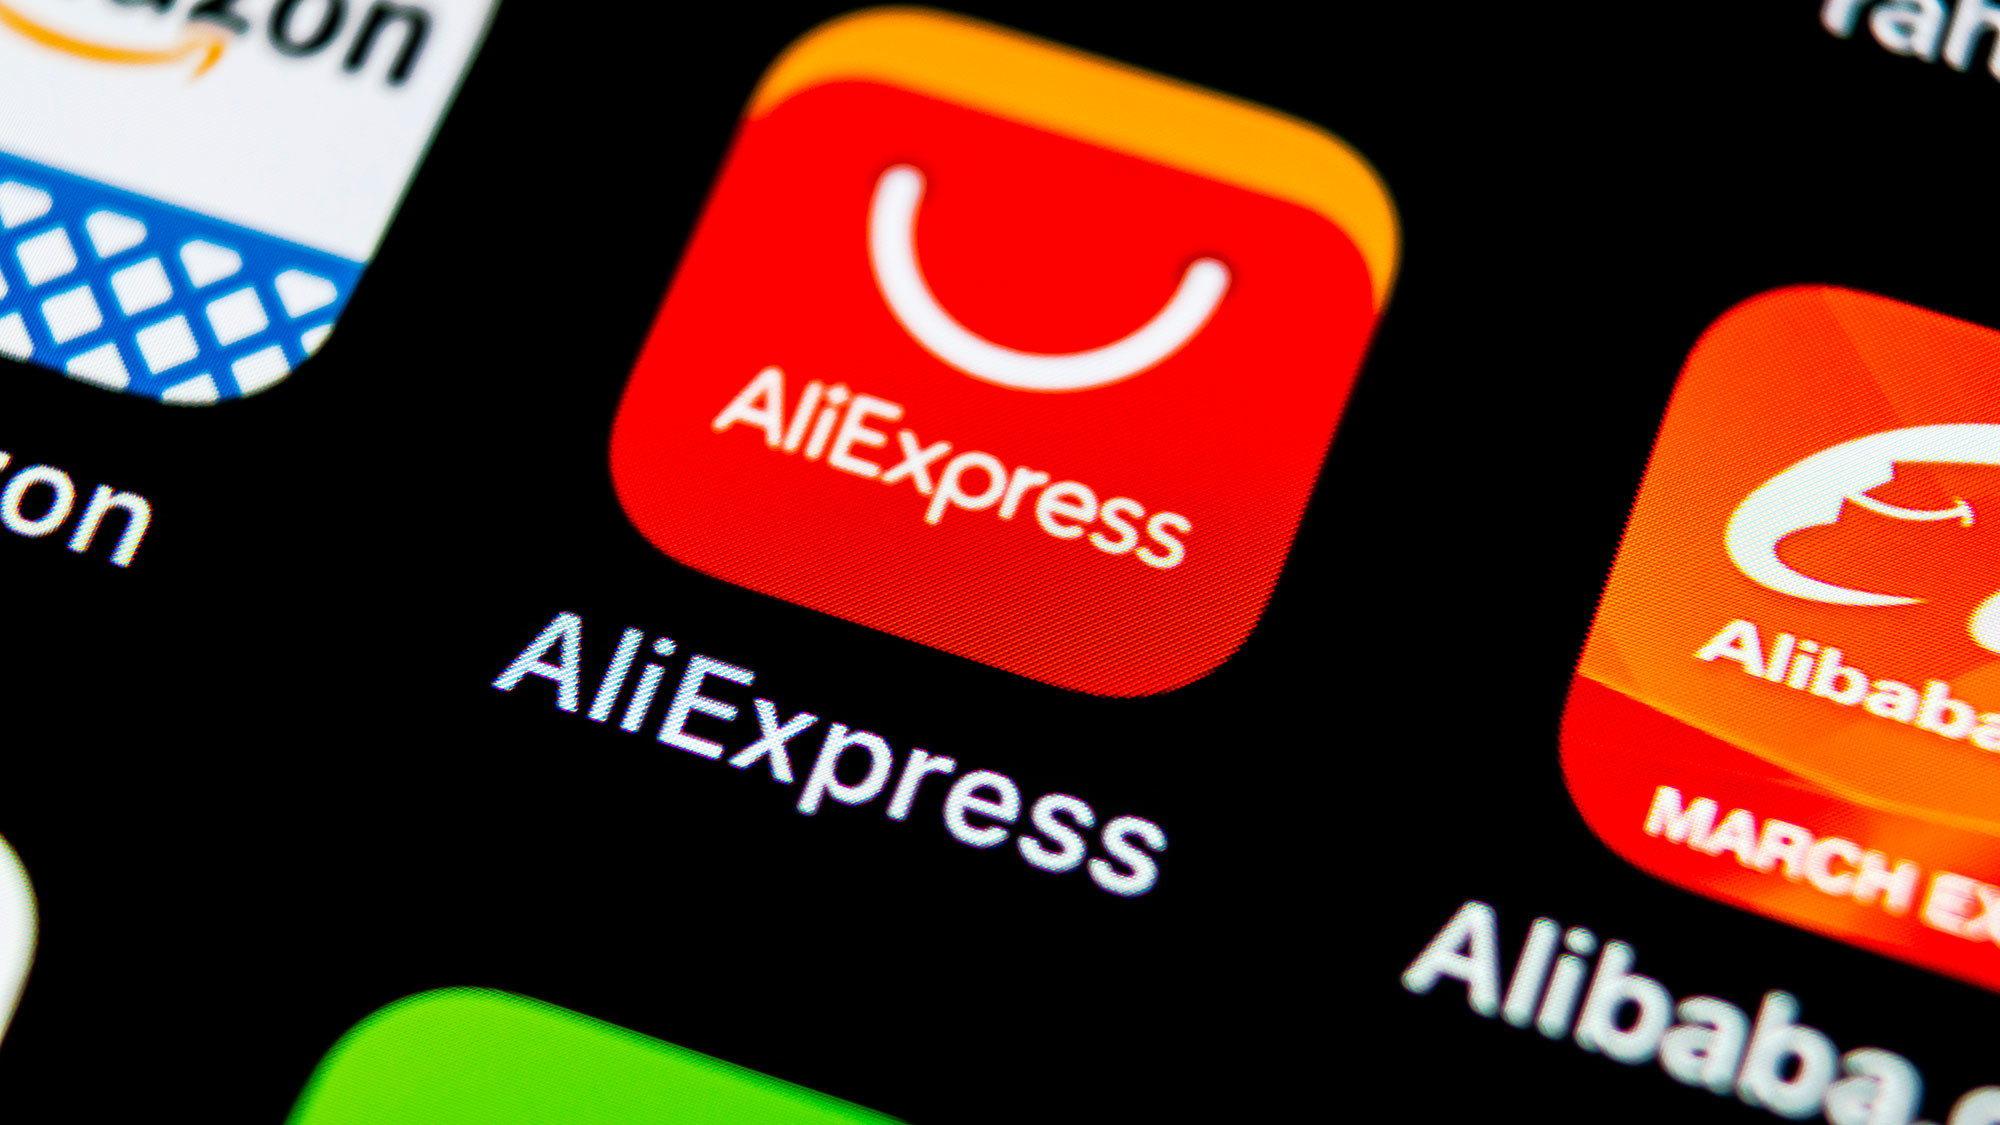 Площадка алиэкспресс. ALIEXPRESS. ALIEXPRESS мобильное приложение. АЛИЭКСПРЕСС картинки. ALIEXPRESS новое приложение.